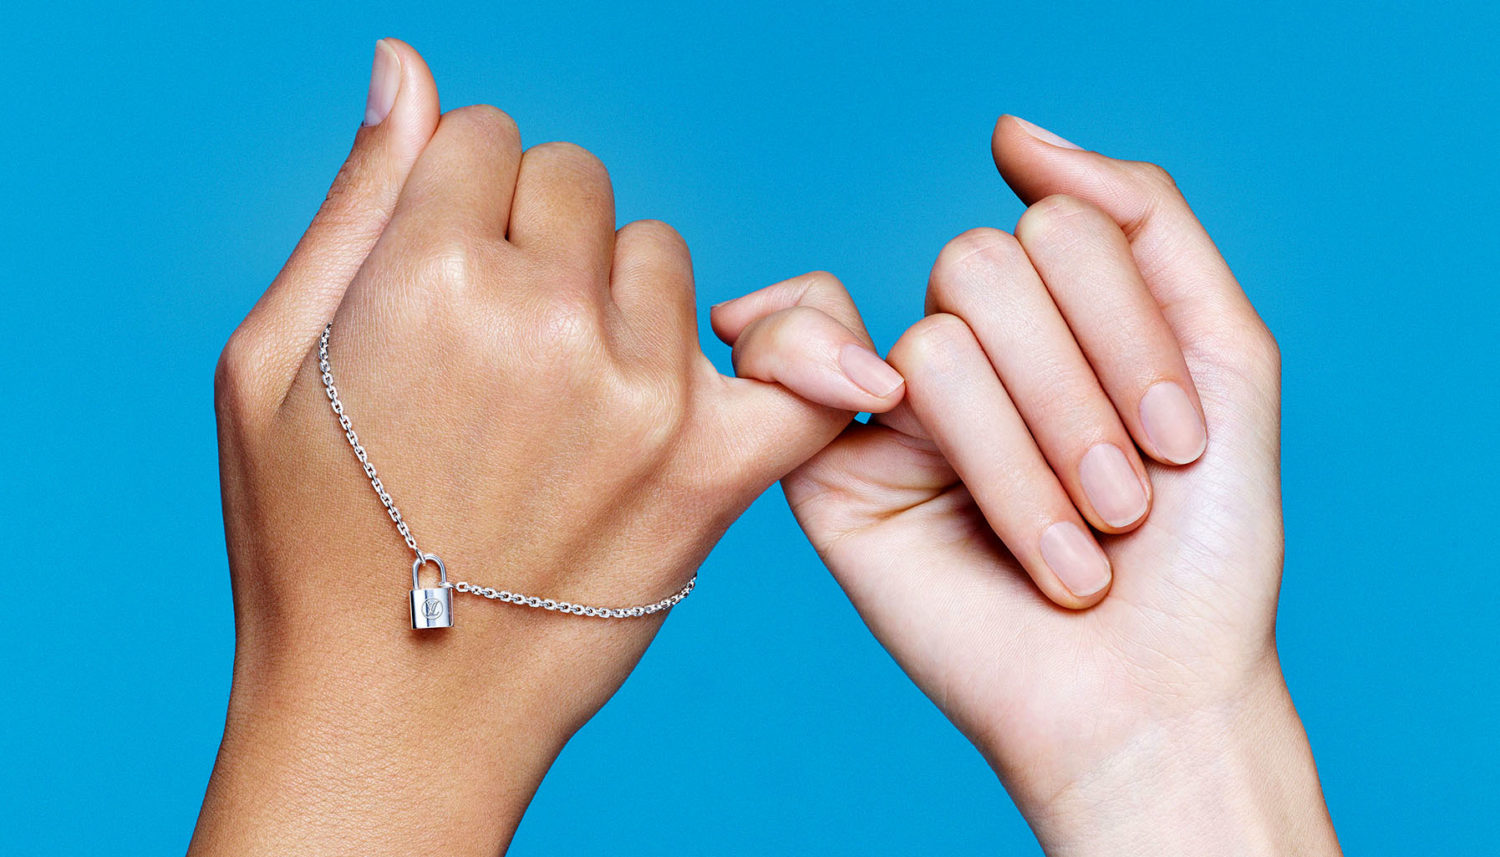 The good cause: Louis Vuitton x UNICEF create a neon summer bracelet